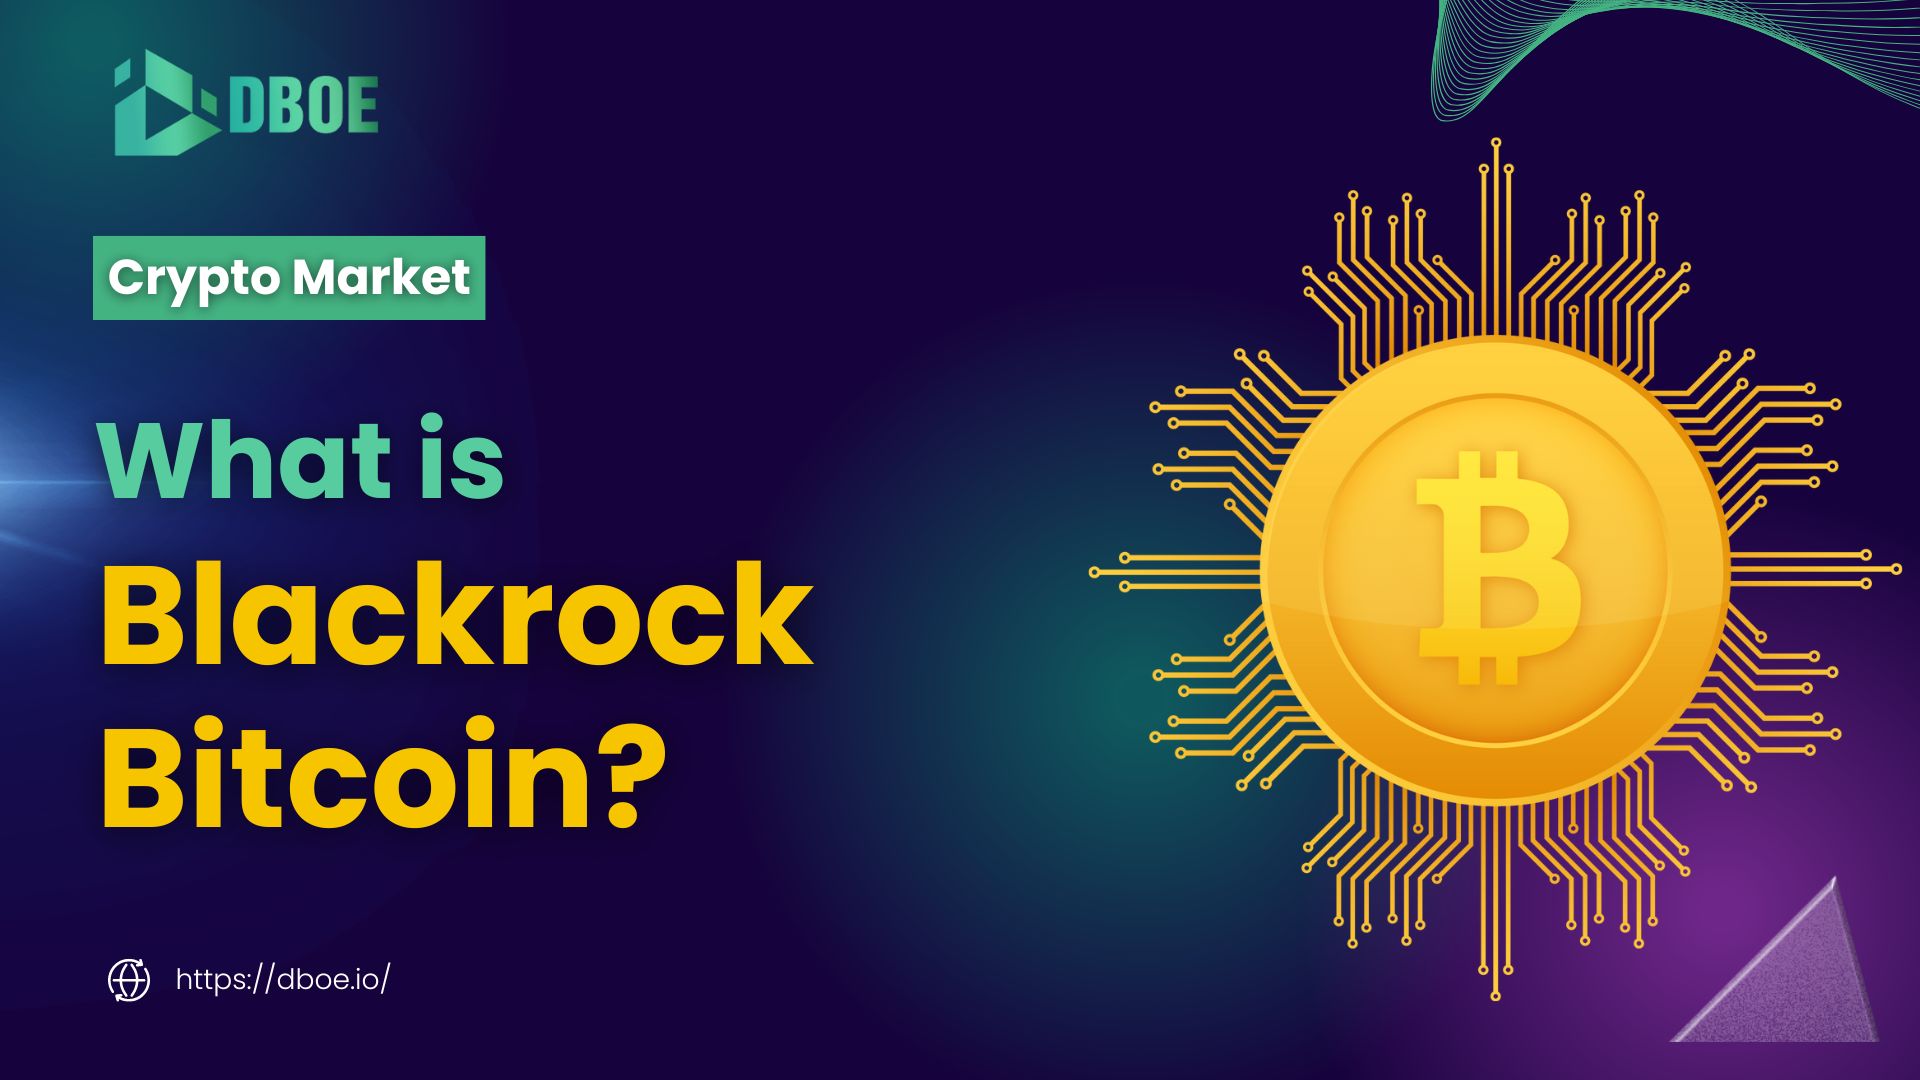 BlackRock Bitcoin: The Ultimate Guide to BlackRock’s Bitcoin ETF